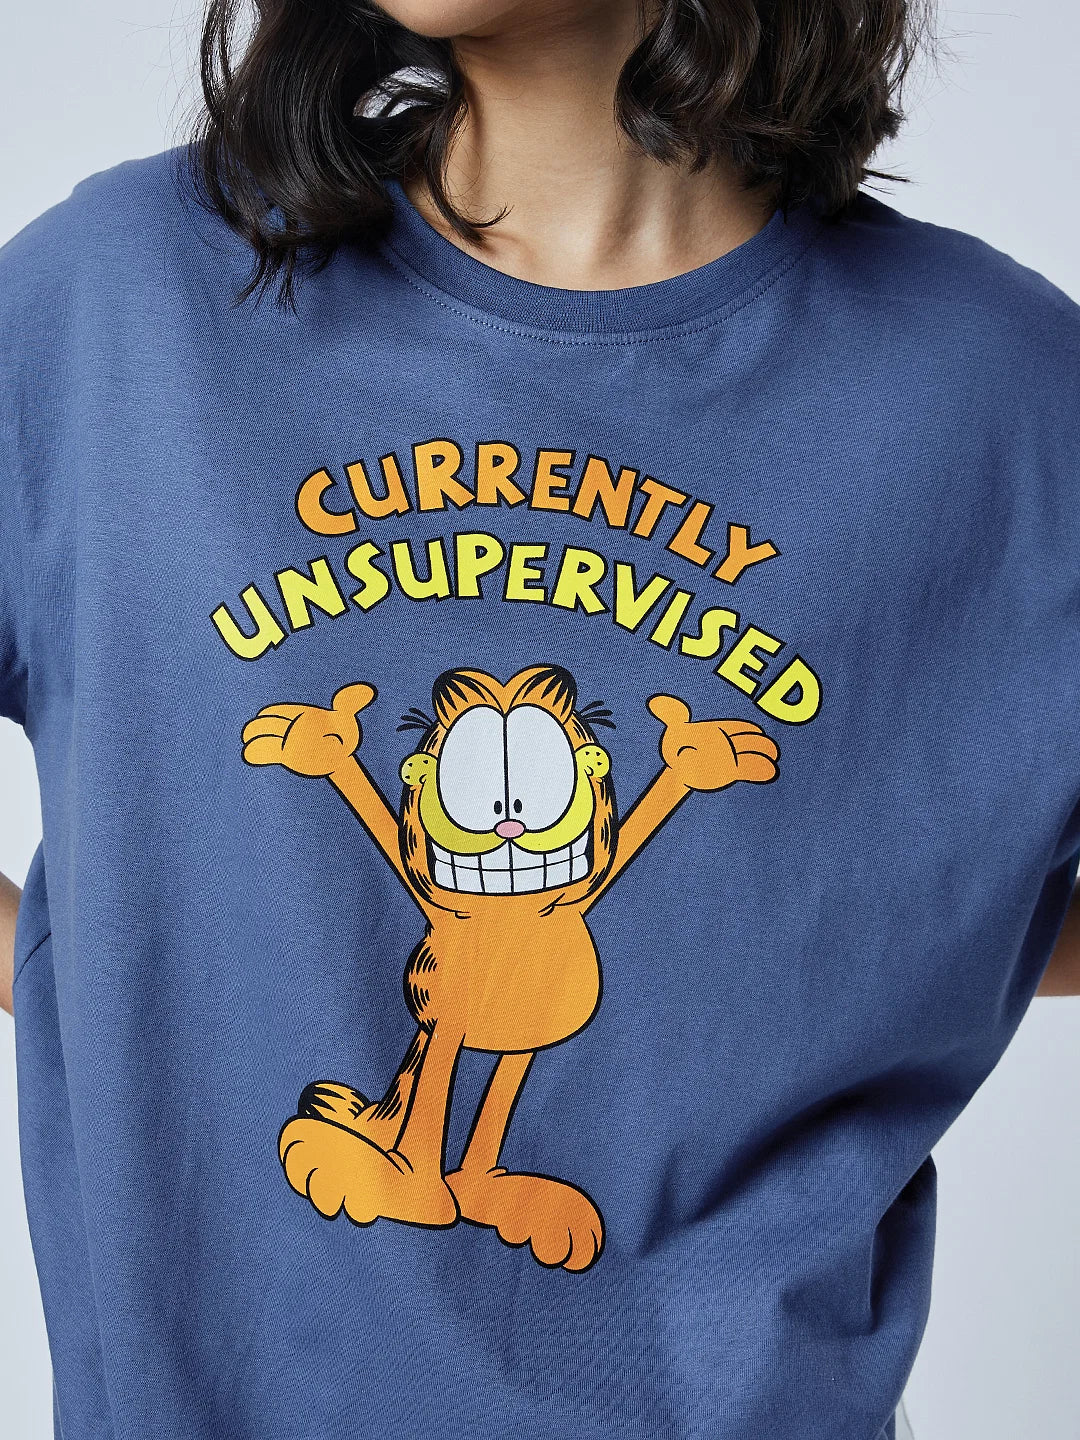 Garfield Unsupervised (UK version)